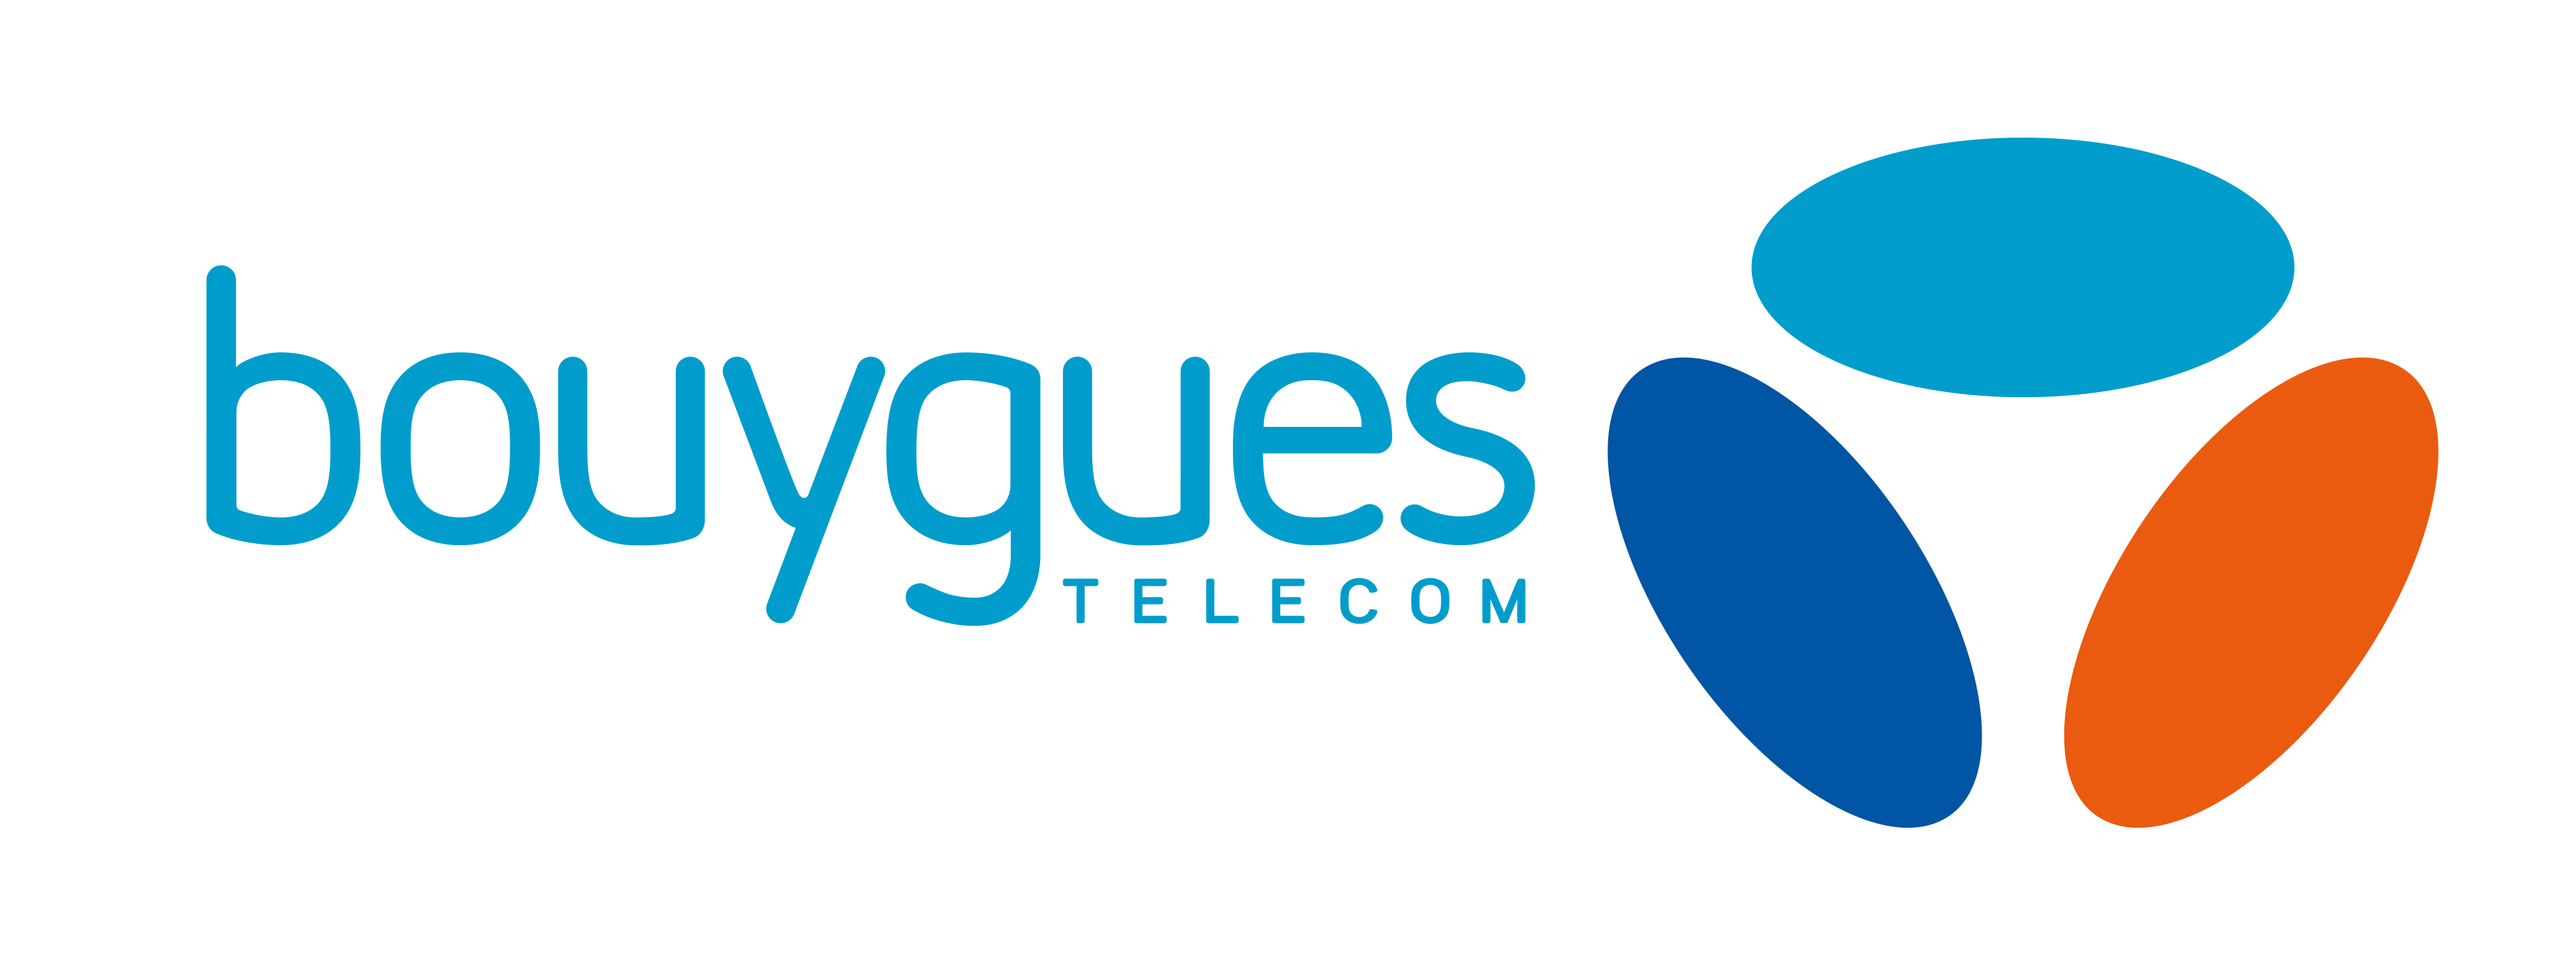 Bouygues Telecom - Data Scientist